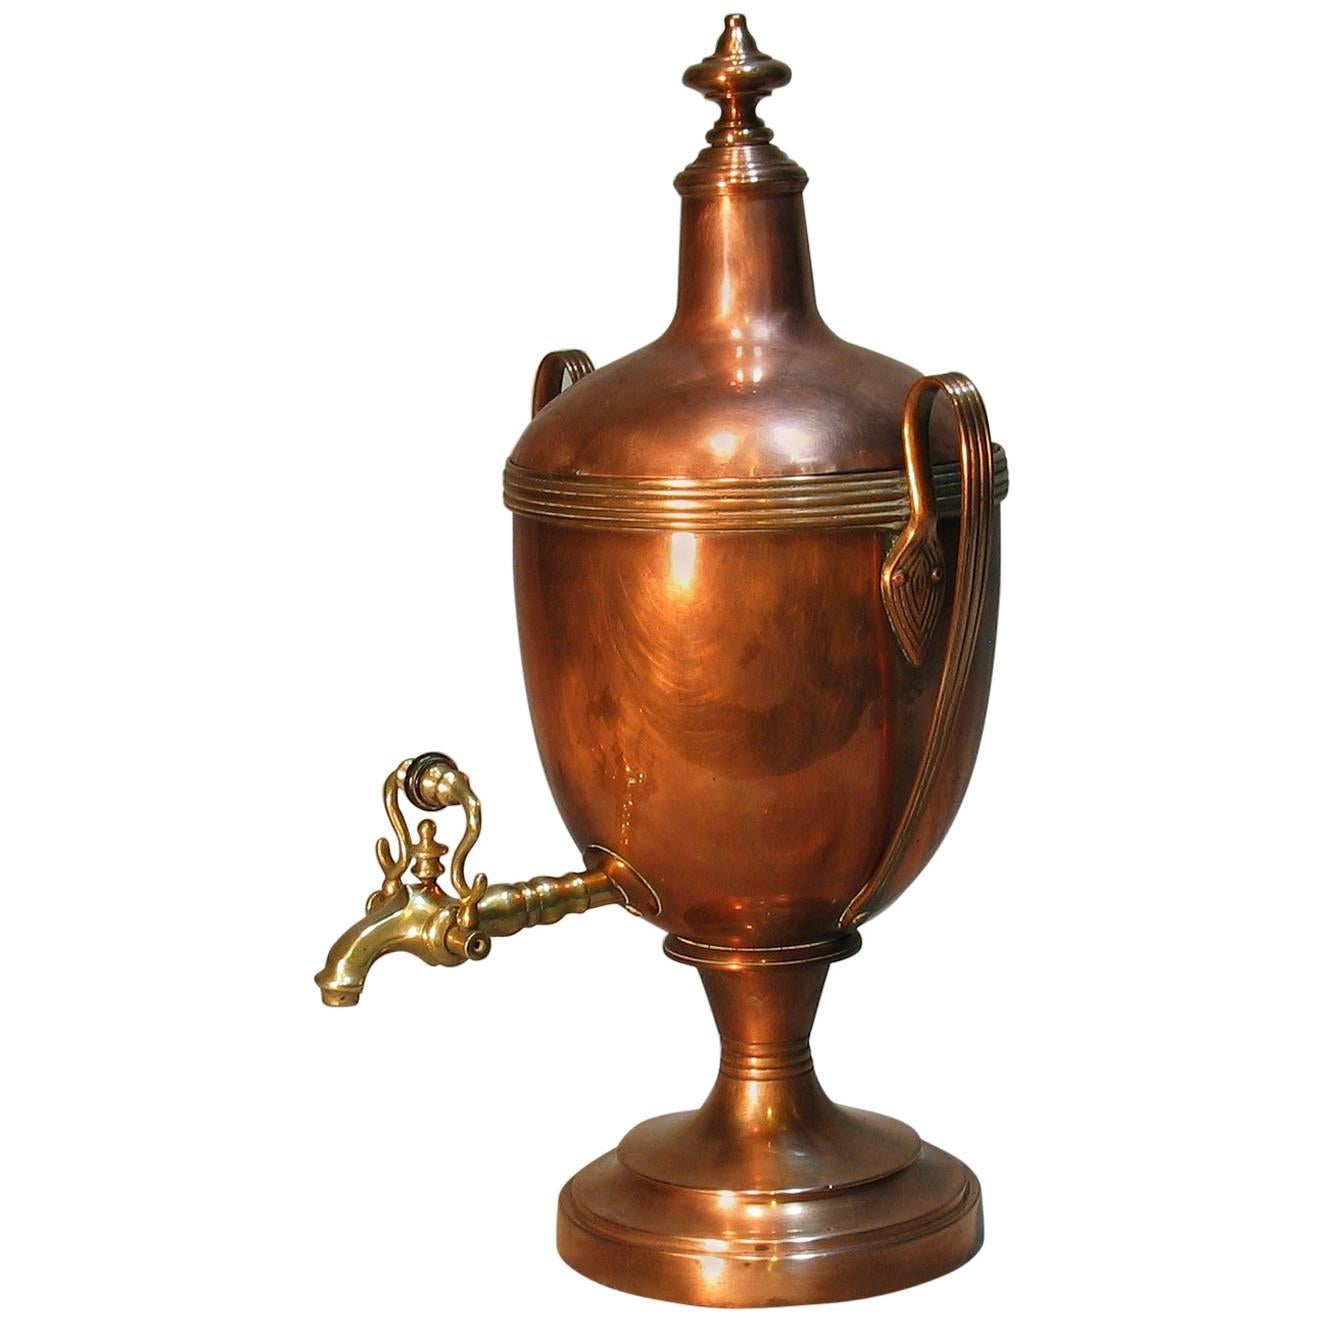 Victorian Copper Hot Water Urn, Paris Exhibition 1855 Medal Winner Design